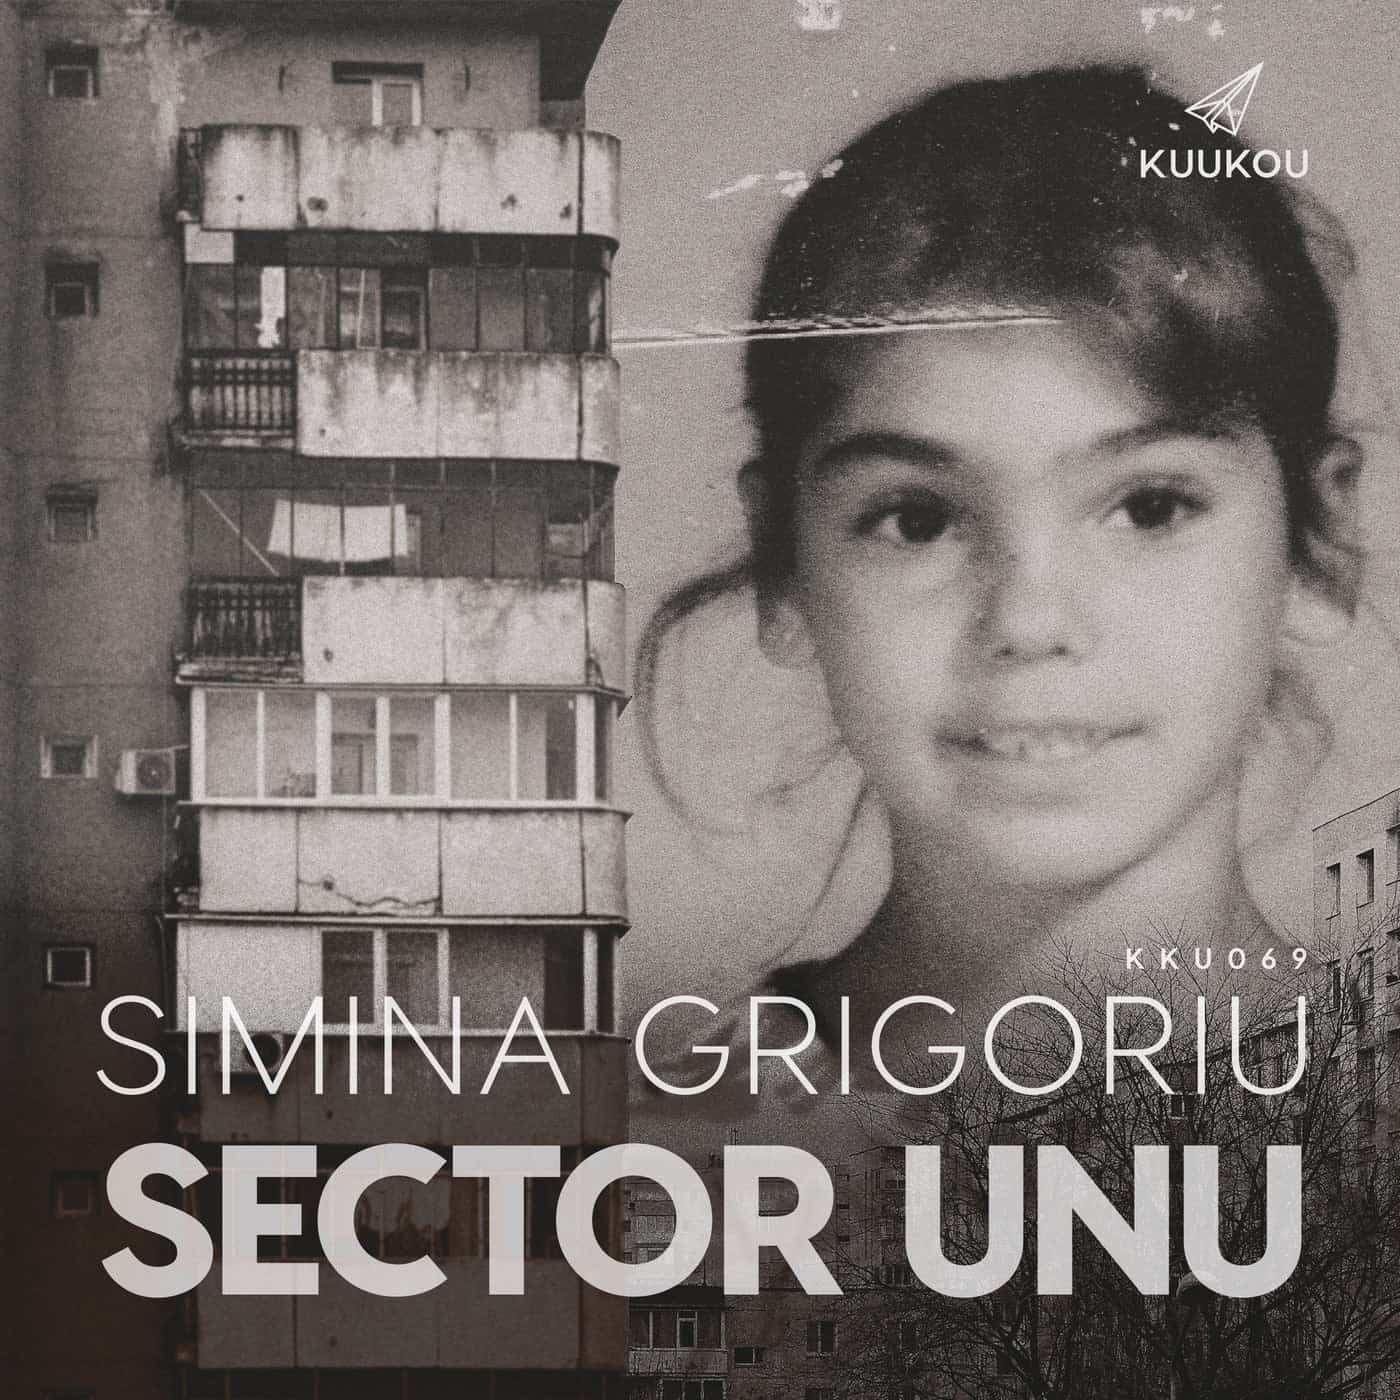 Download Simina Grigoriu - Sector Unu on Electrobuzz